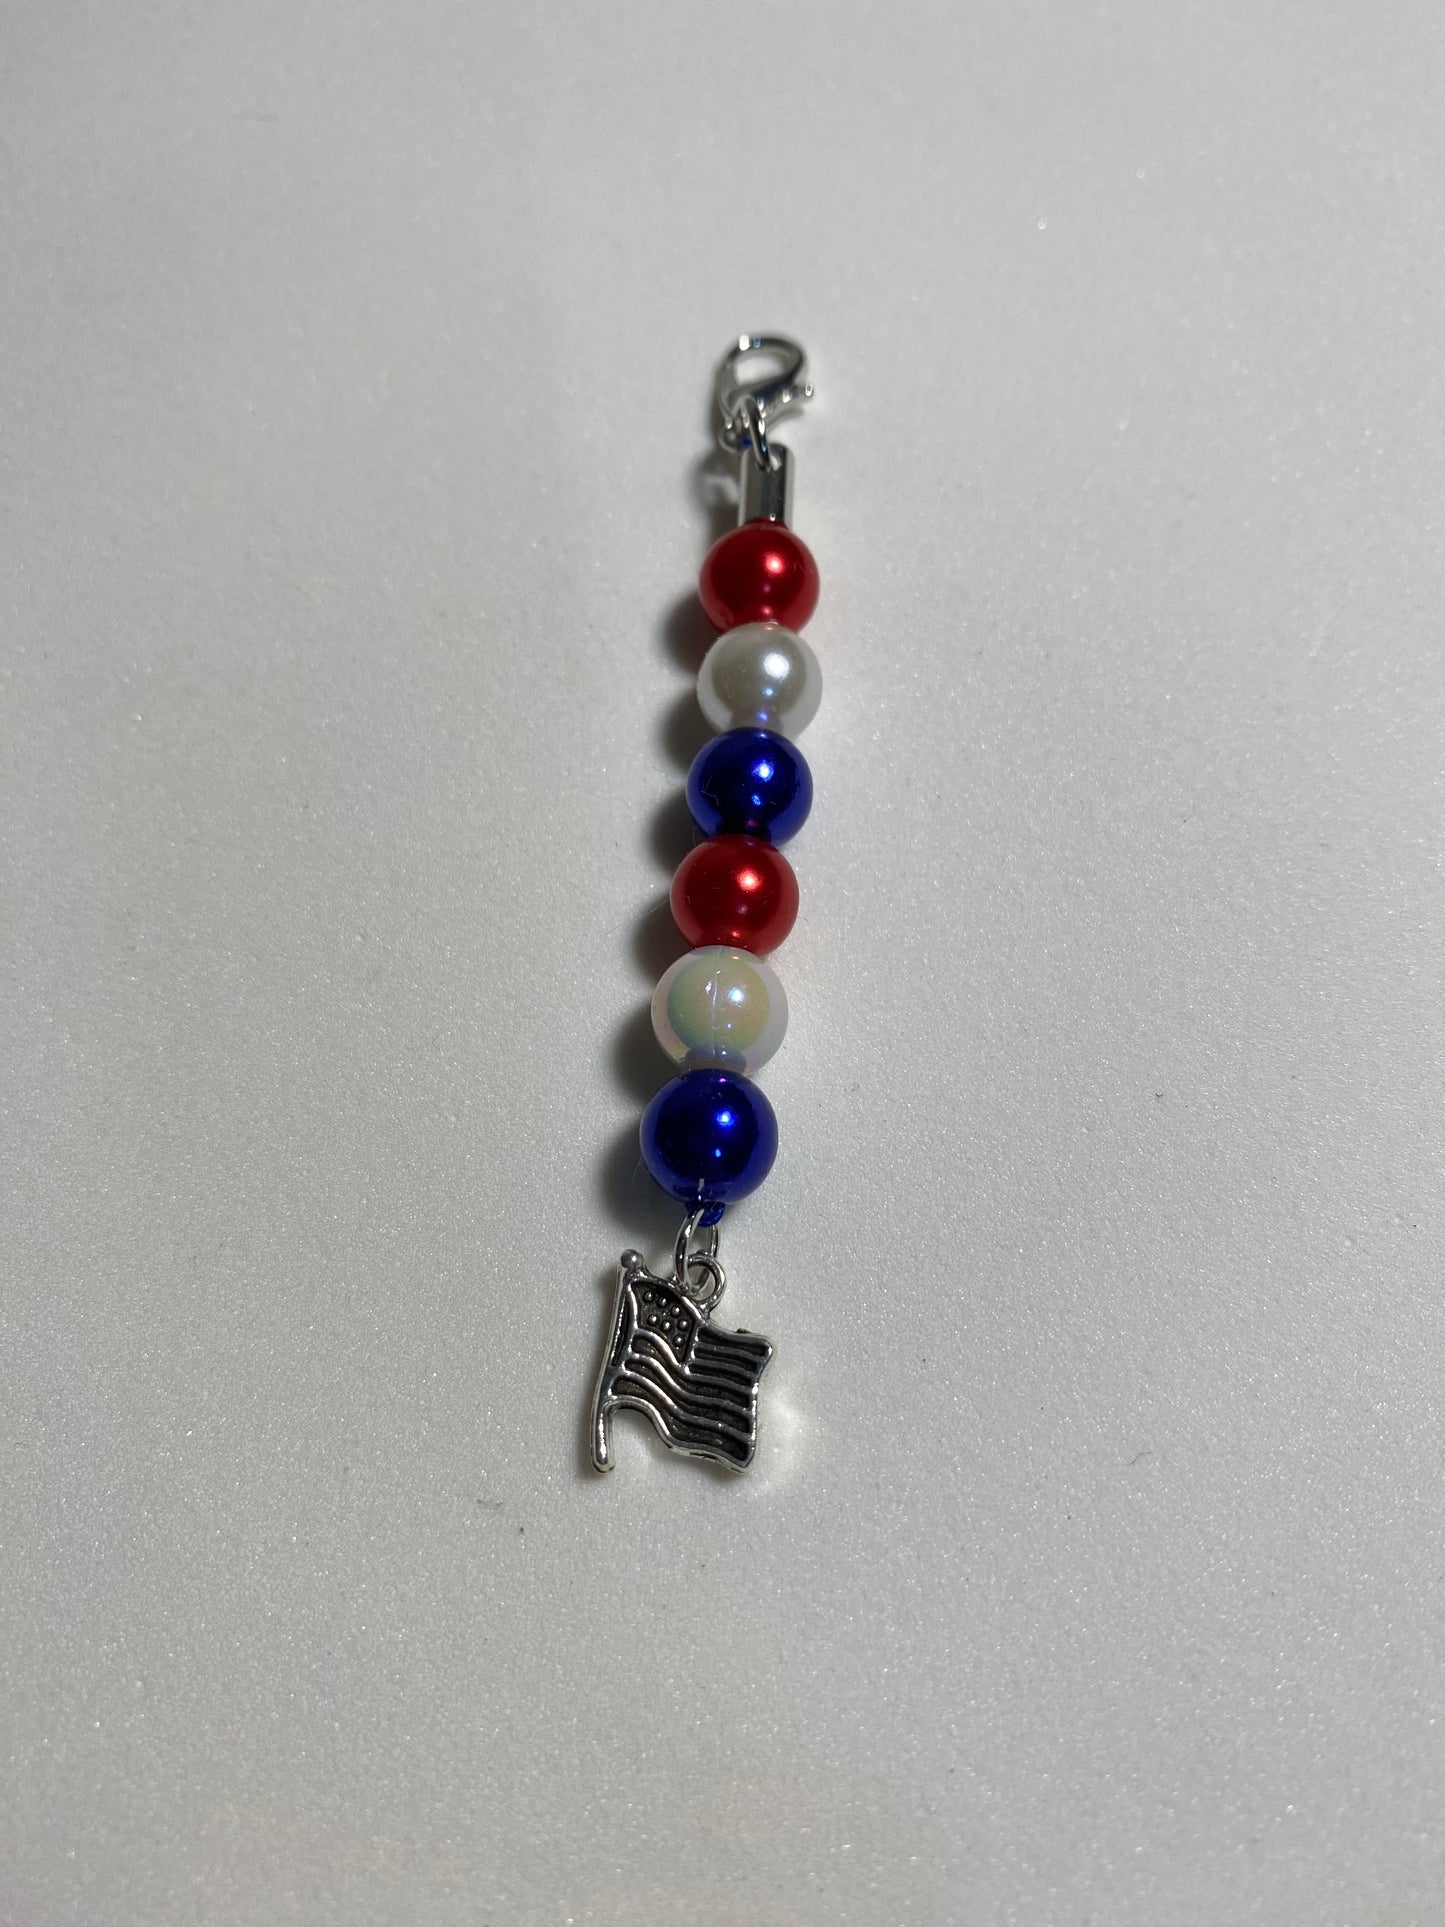 American Flag Zipper Pull / Keychain Charm